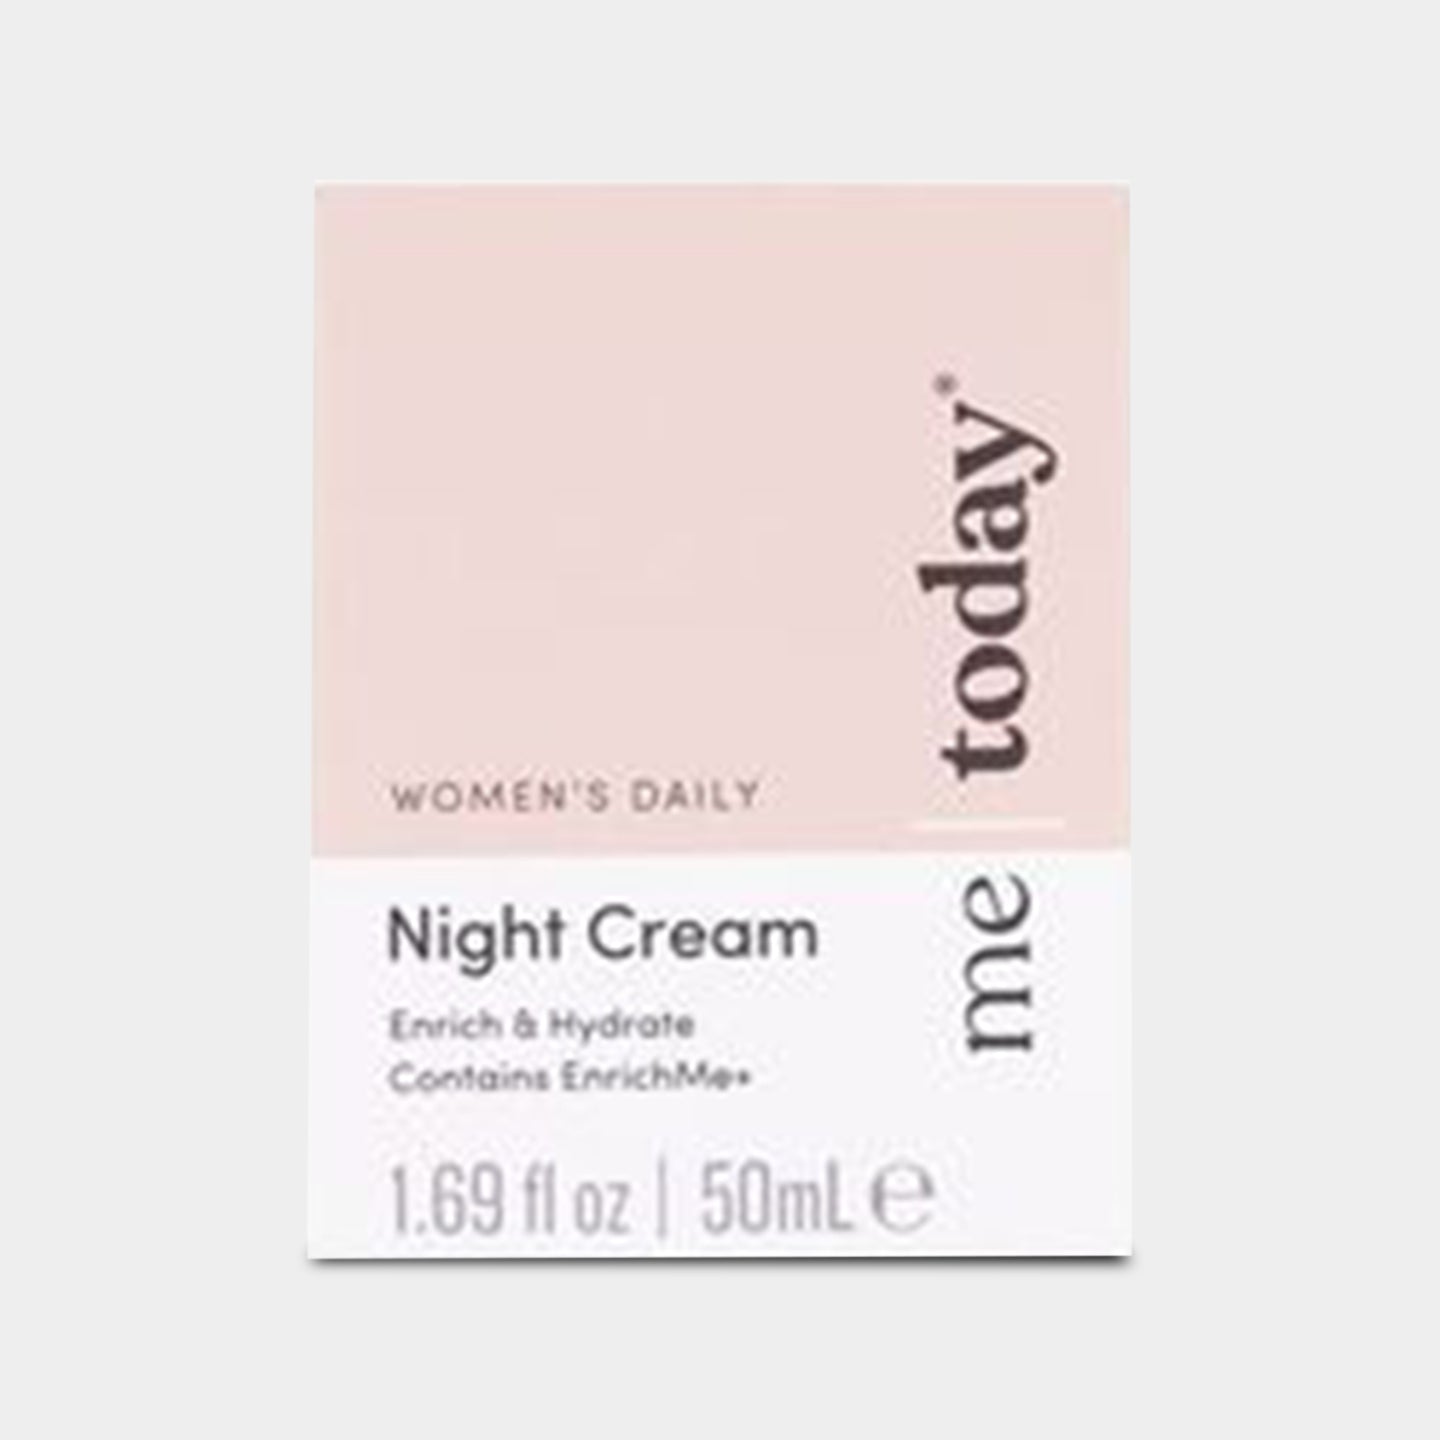 Me Today Women's Daily Night Cream Skin Care, 50ml | 1.69 fl oz A2